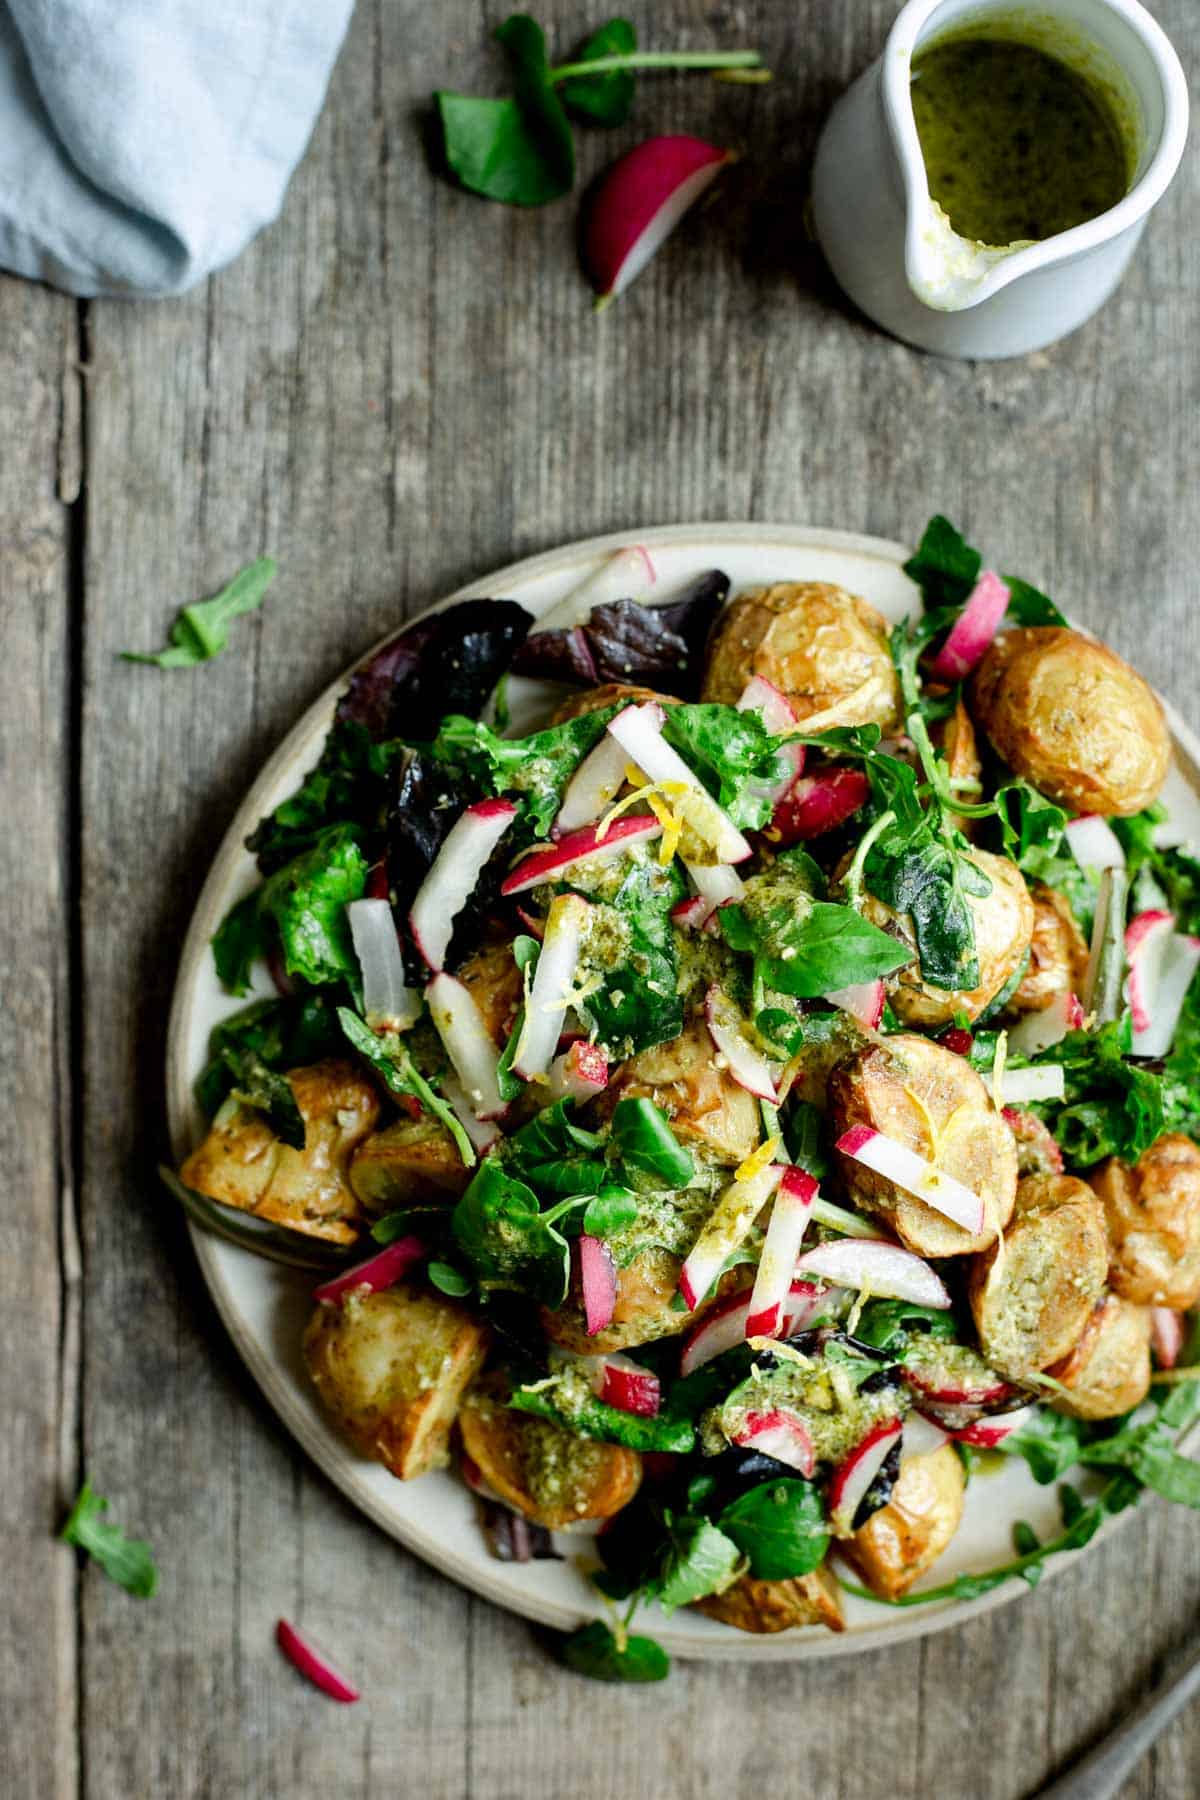 Roasted new potato salad with pesto. Perfect summer meal! #saladrecipe #newpotatoes #vegan | @annabanana.co